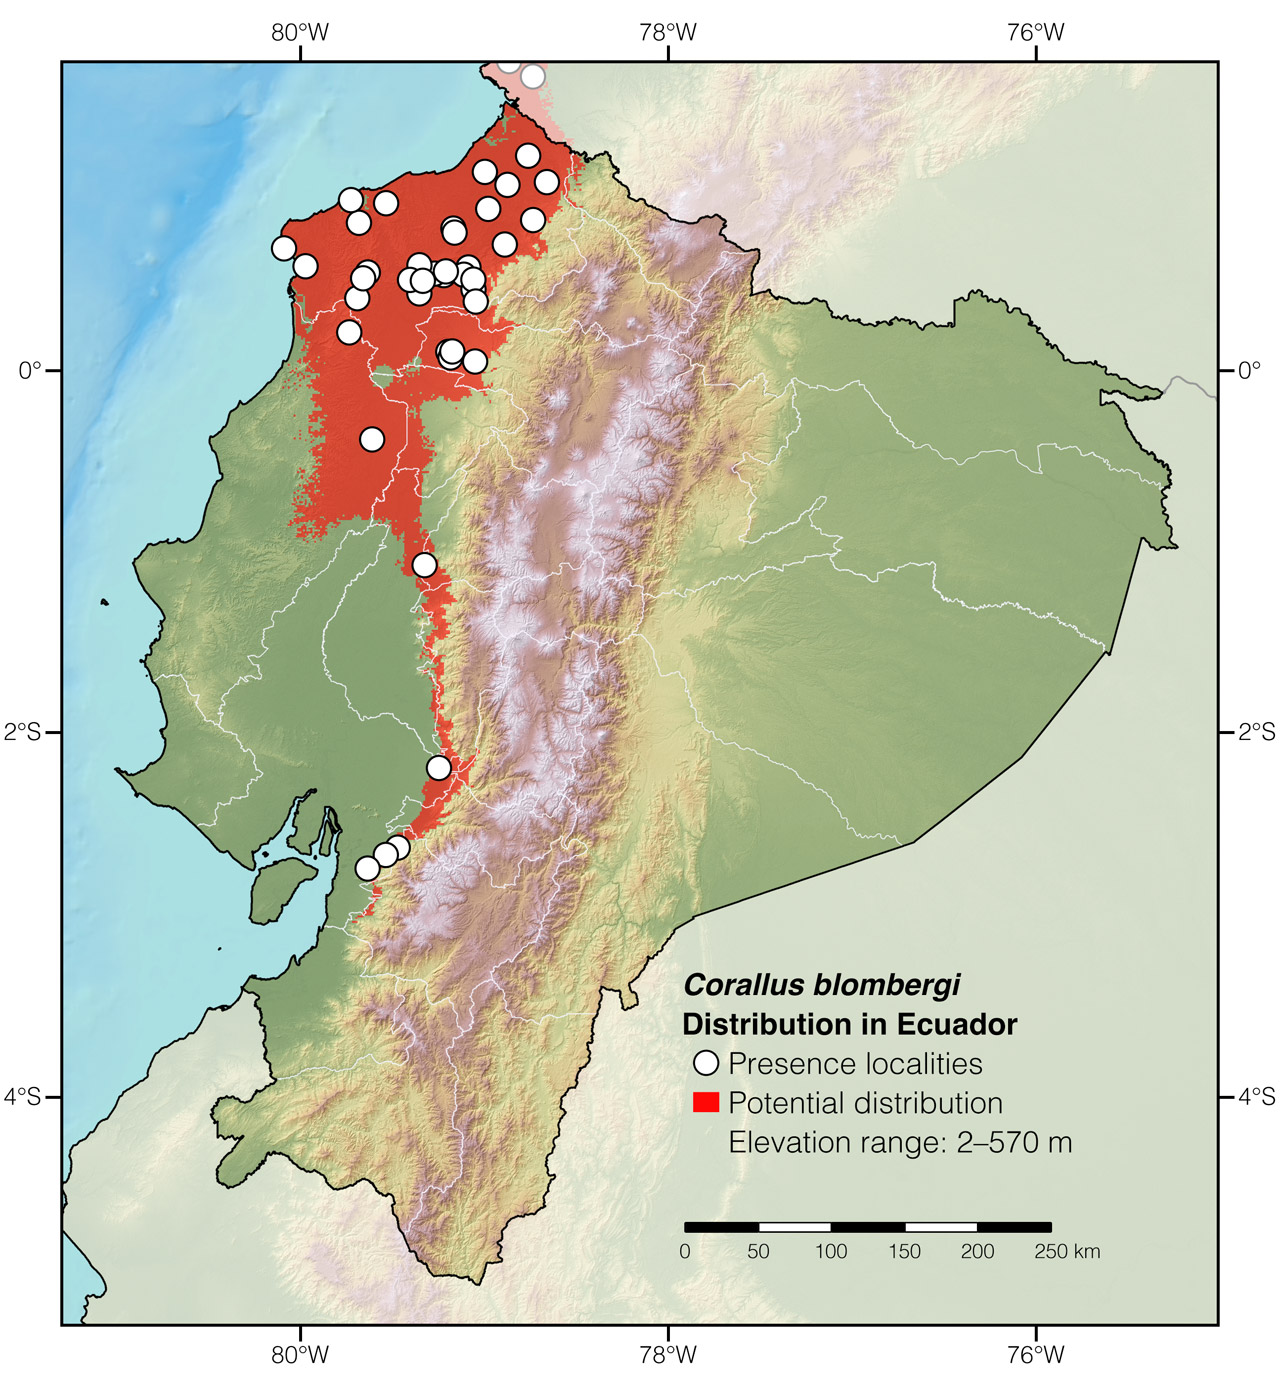 Distribution of Corallus blombergi in Ecuador